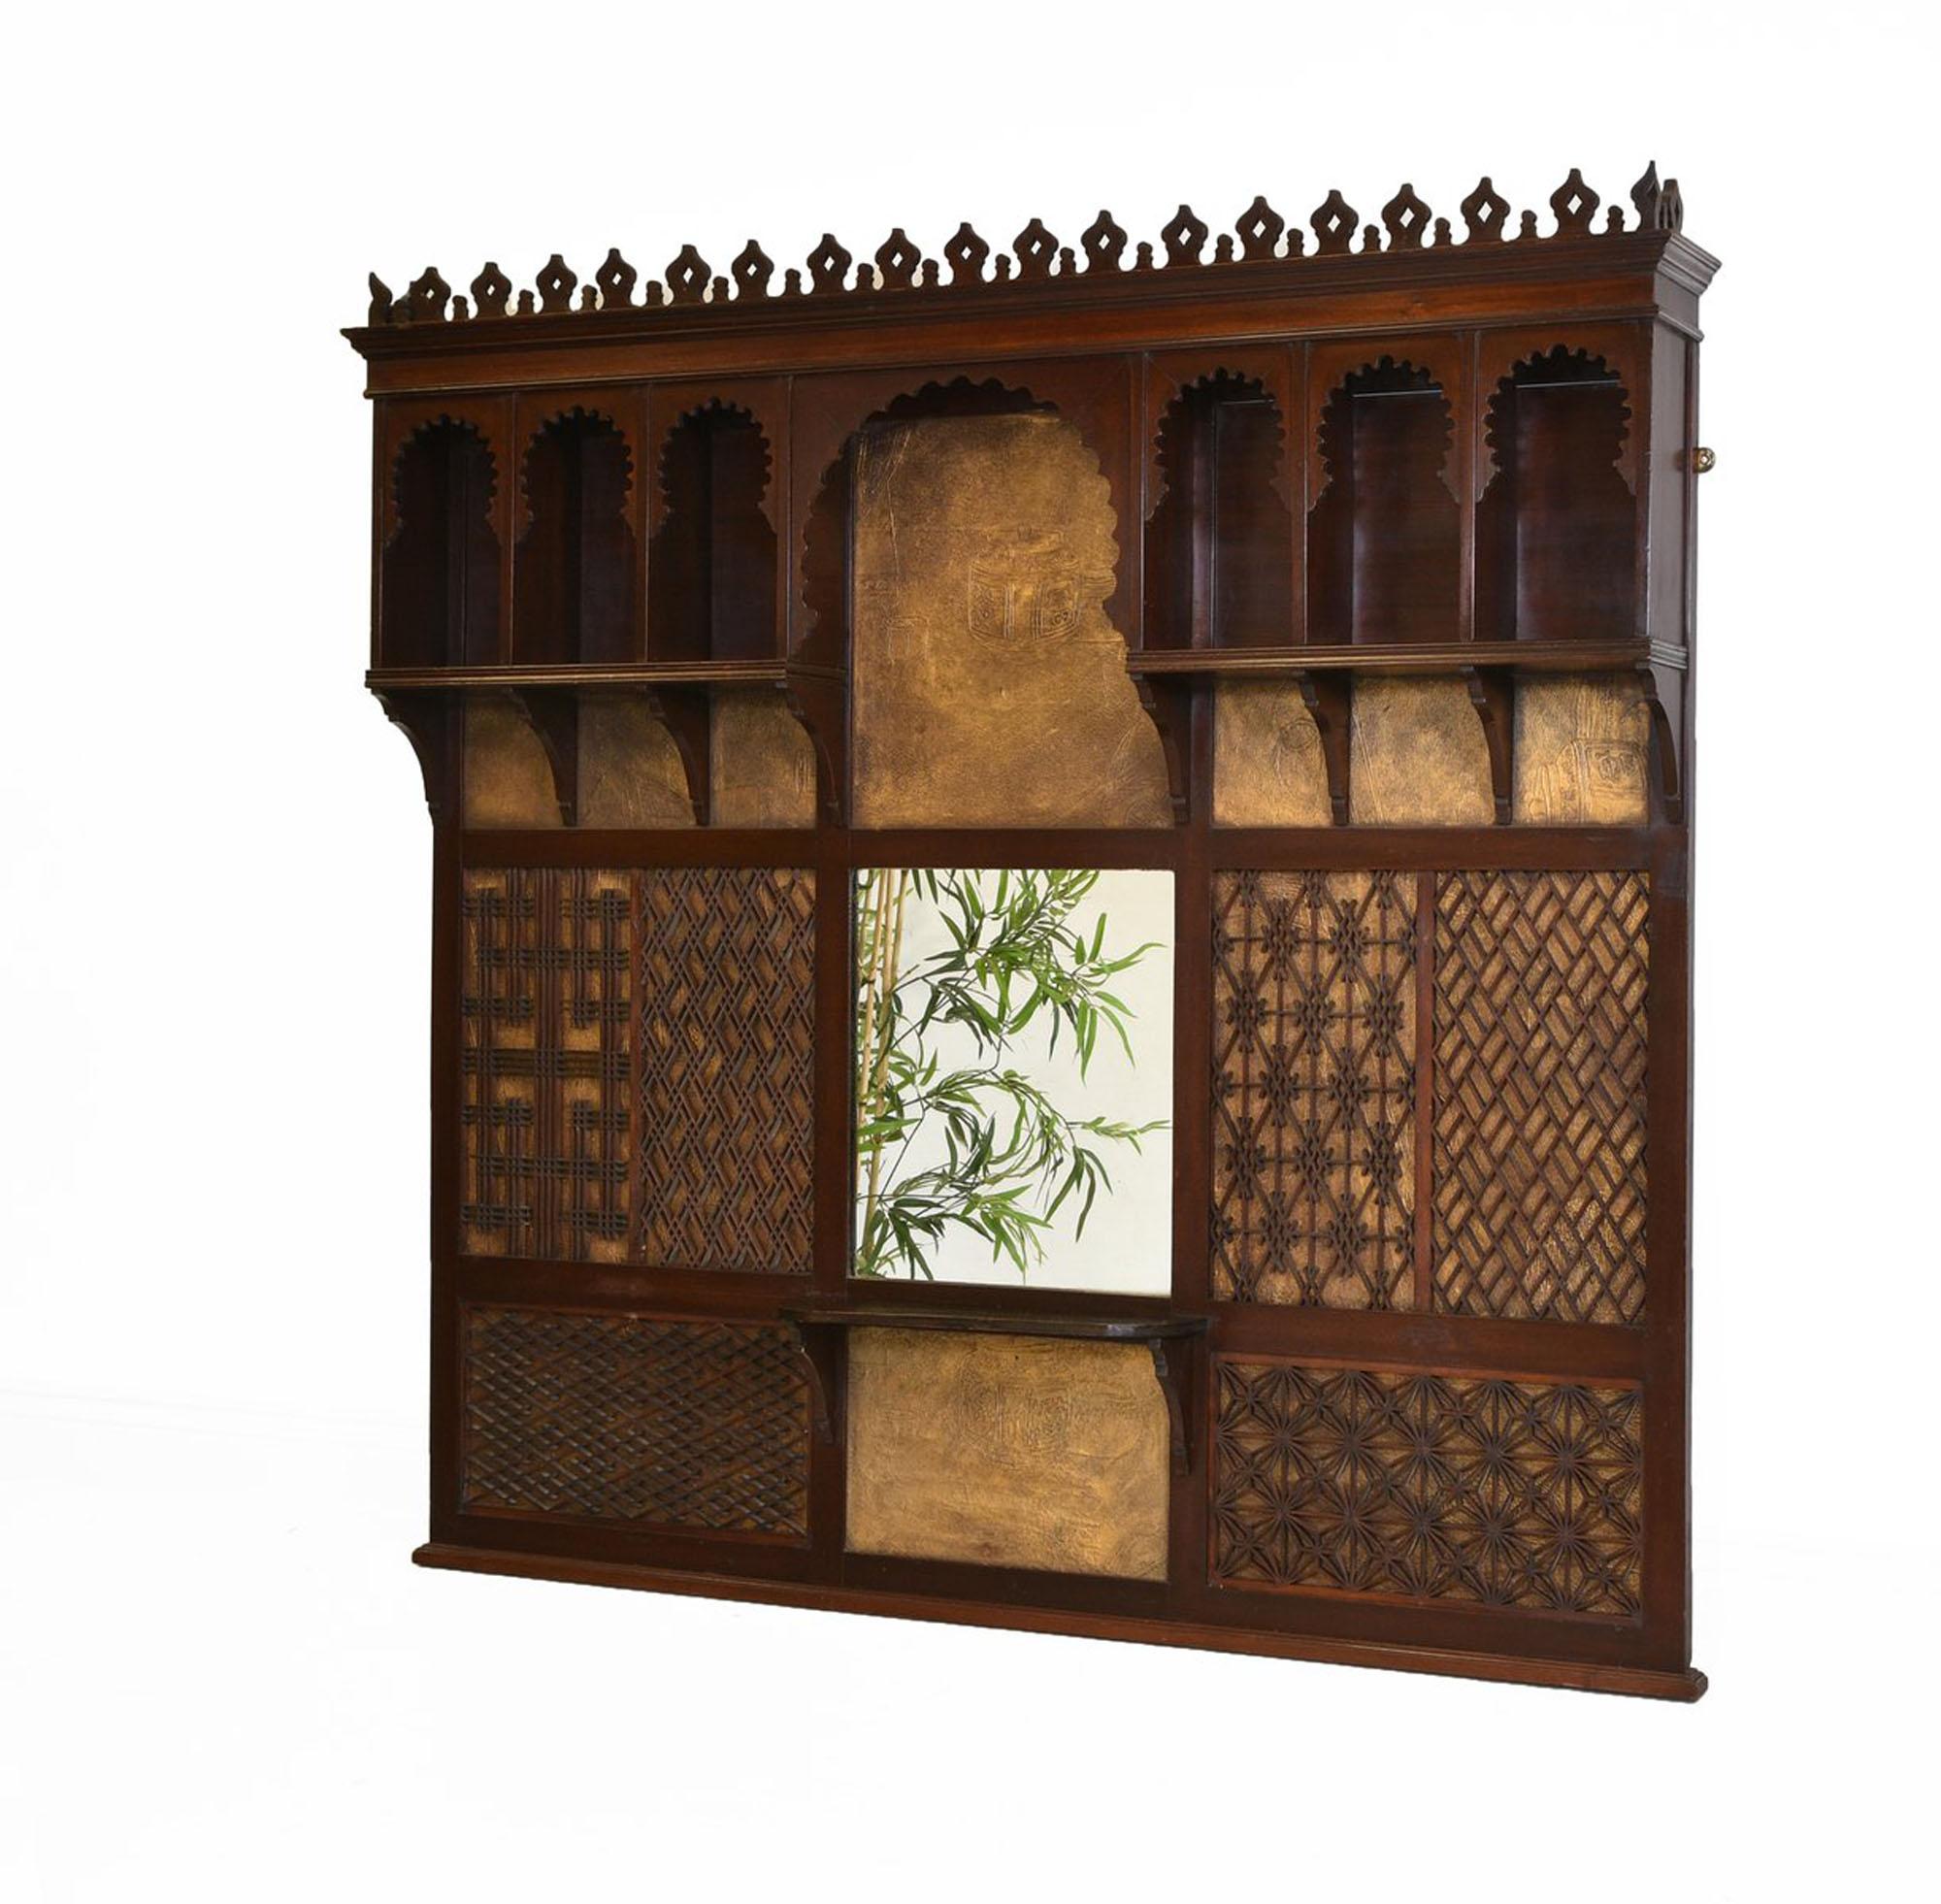 Antique Aesthetic Movement Large Decorative Wall Mantle Moorish Mirror 5